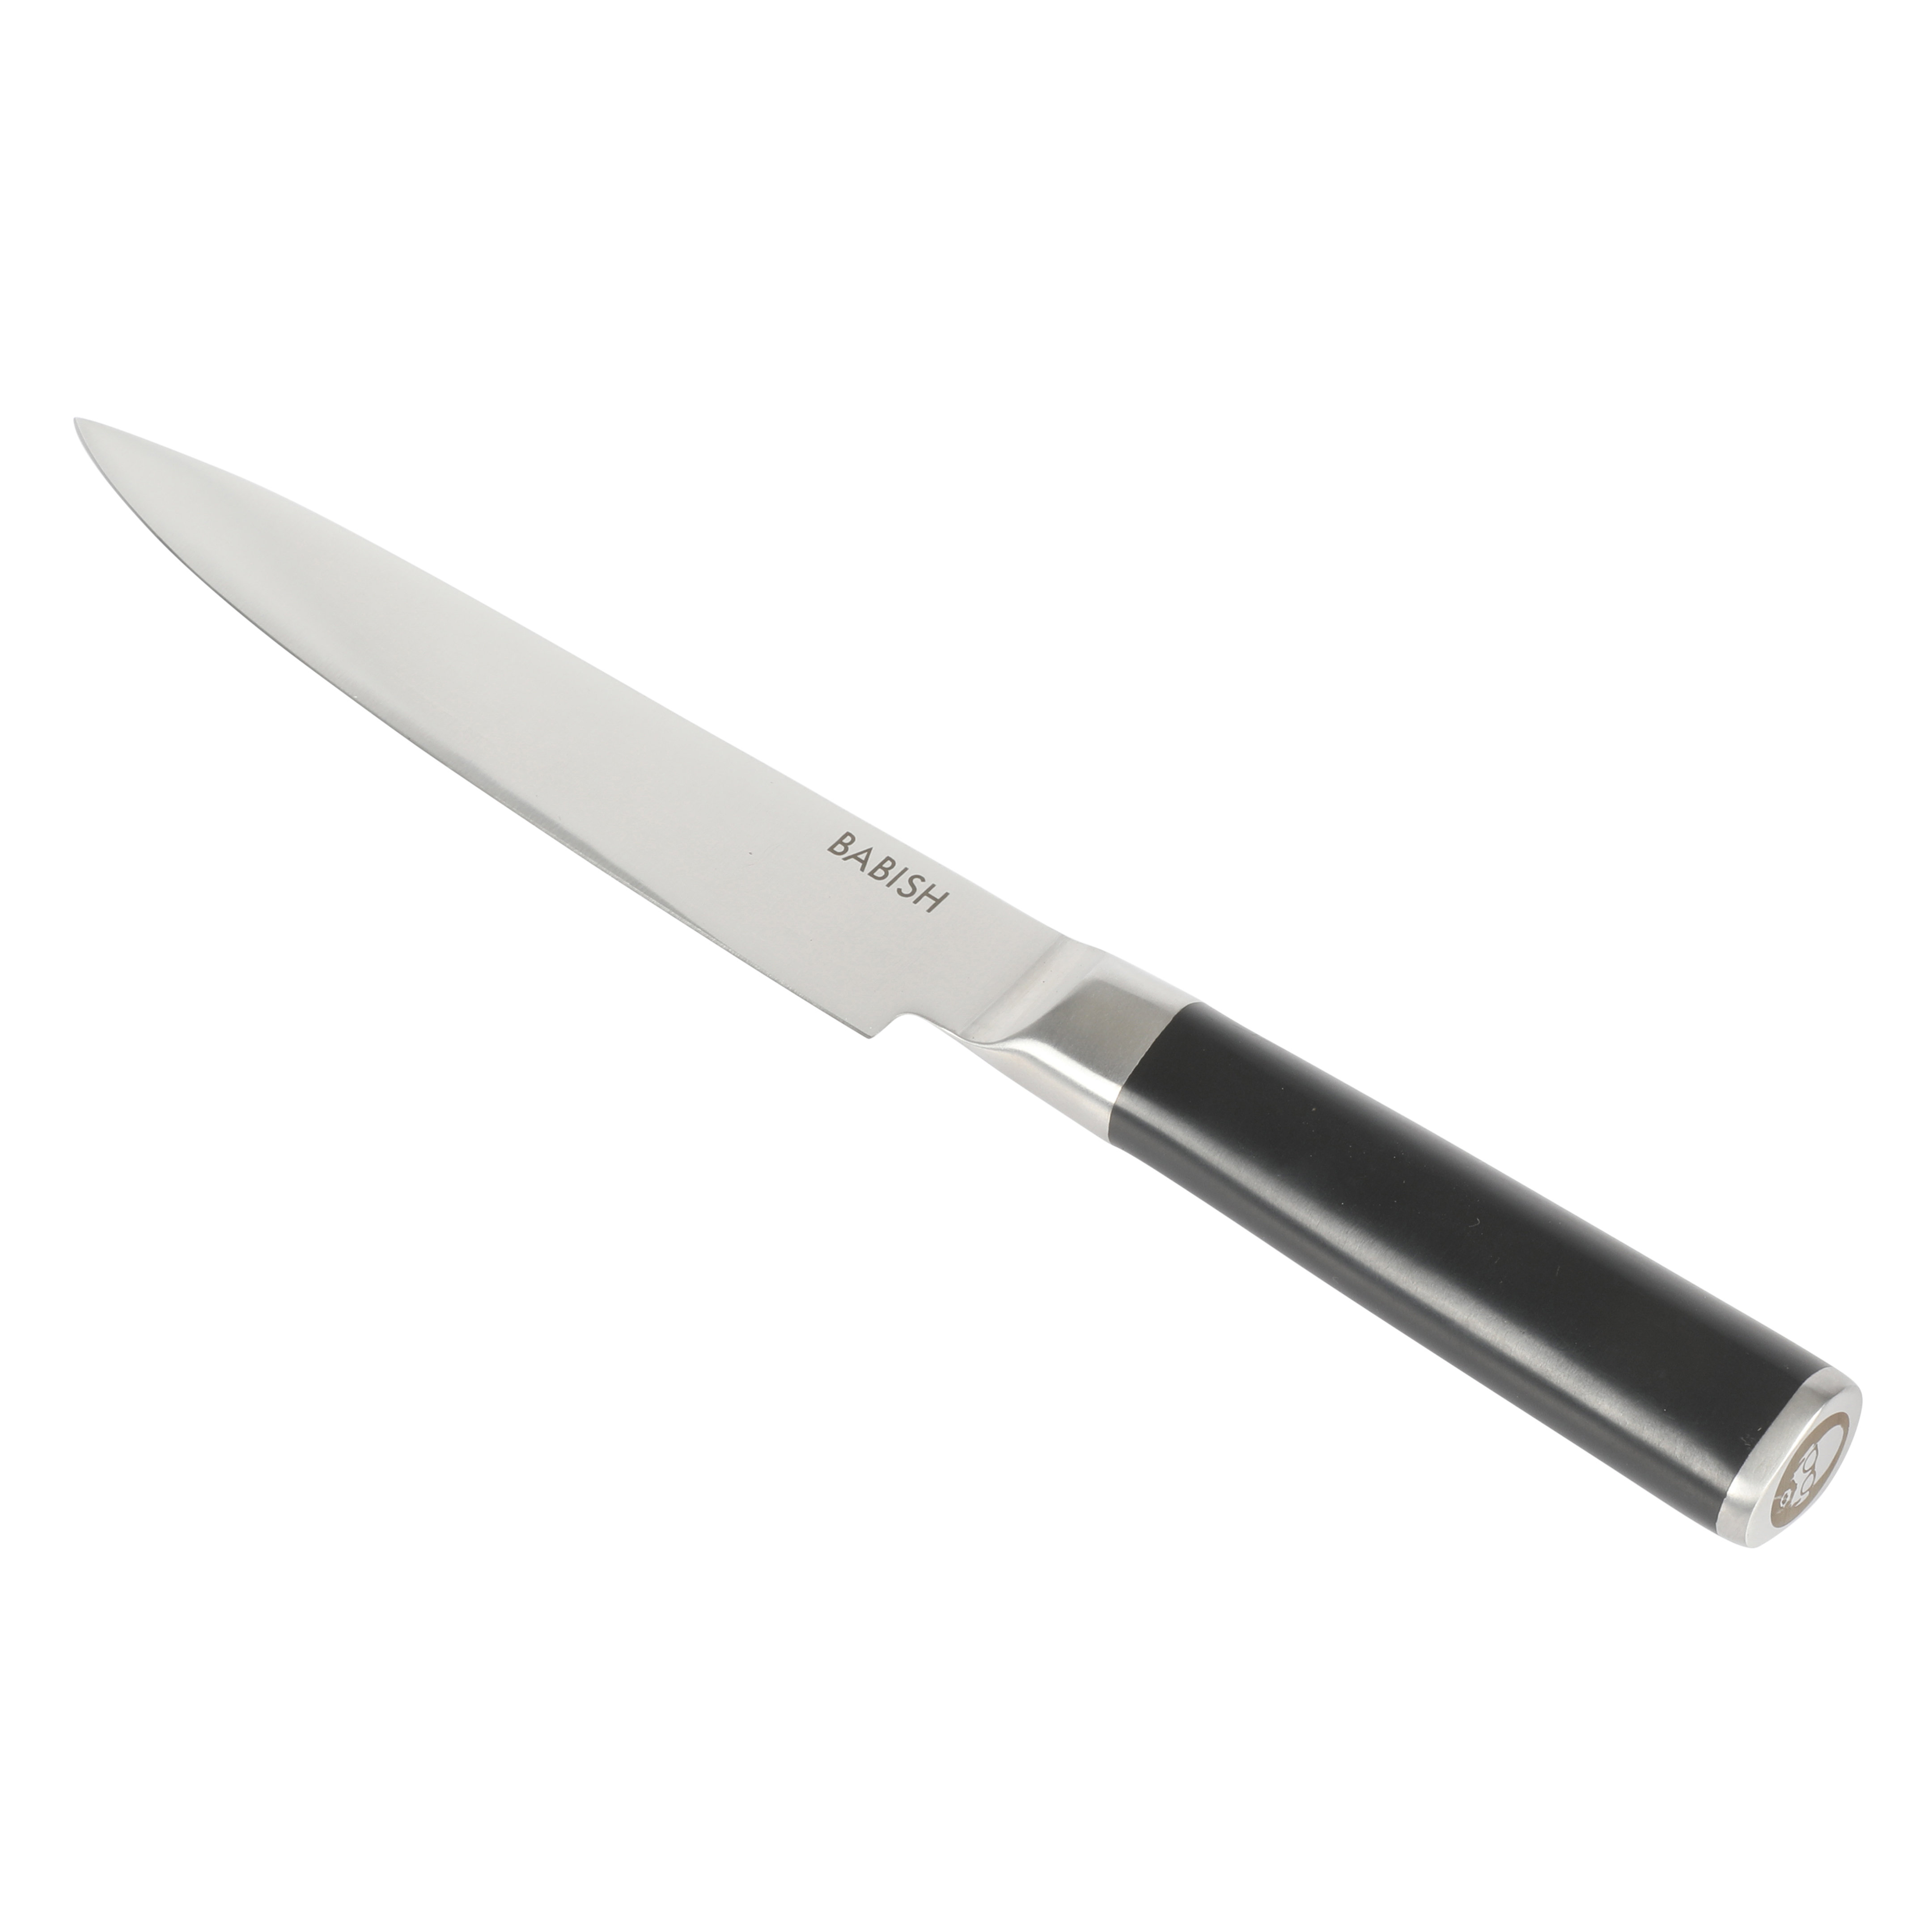 Babish High-Carbon 1.4116 German Steel Cutlery, 8 Chef Knife